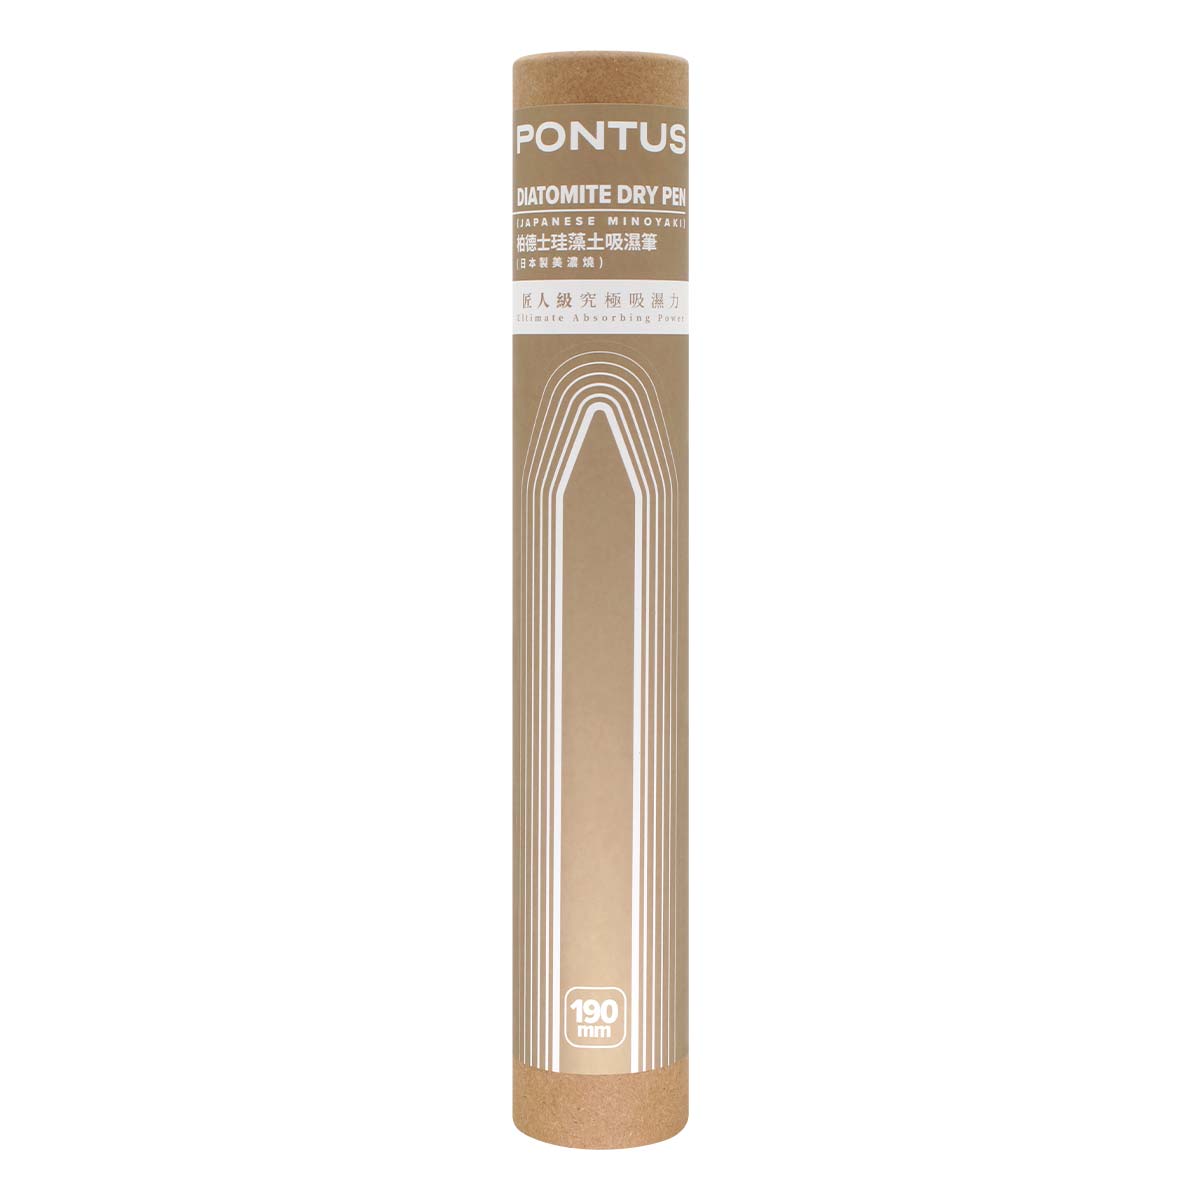 PONTUS Diatomite Dry Pen (Japanese Minoyaki) (For male toys)-p_2